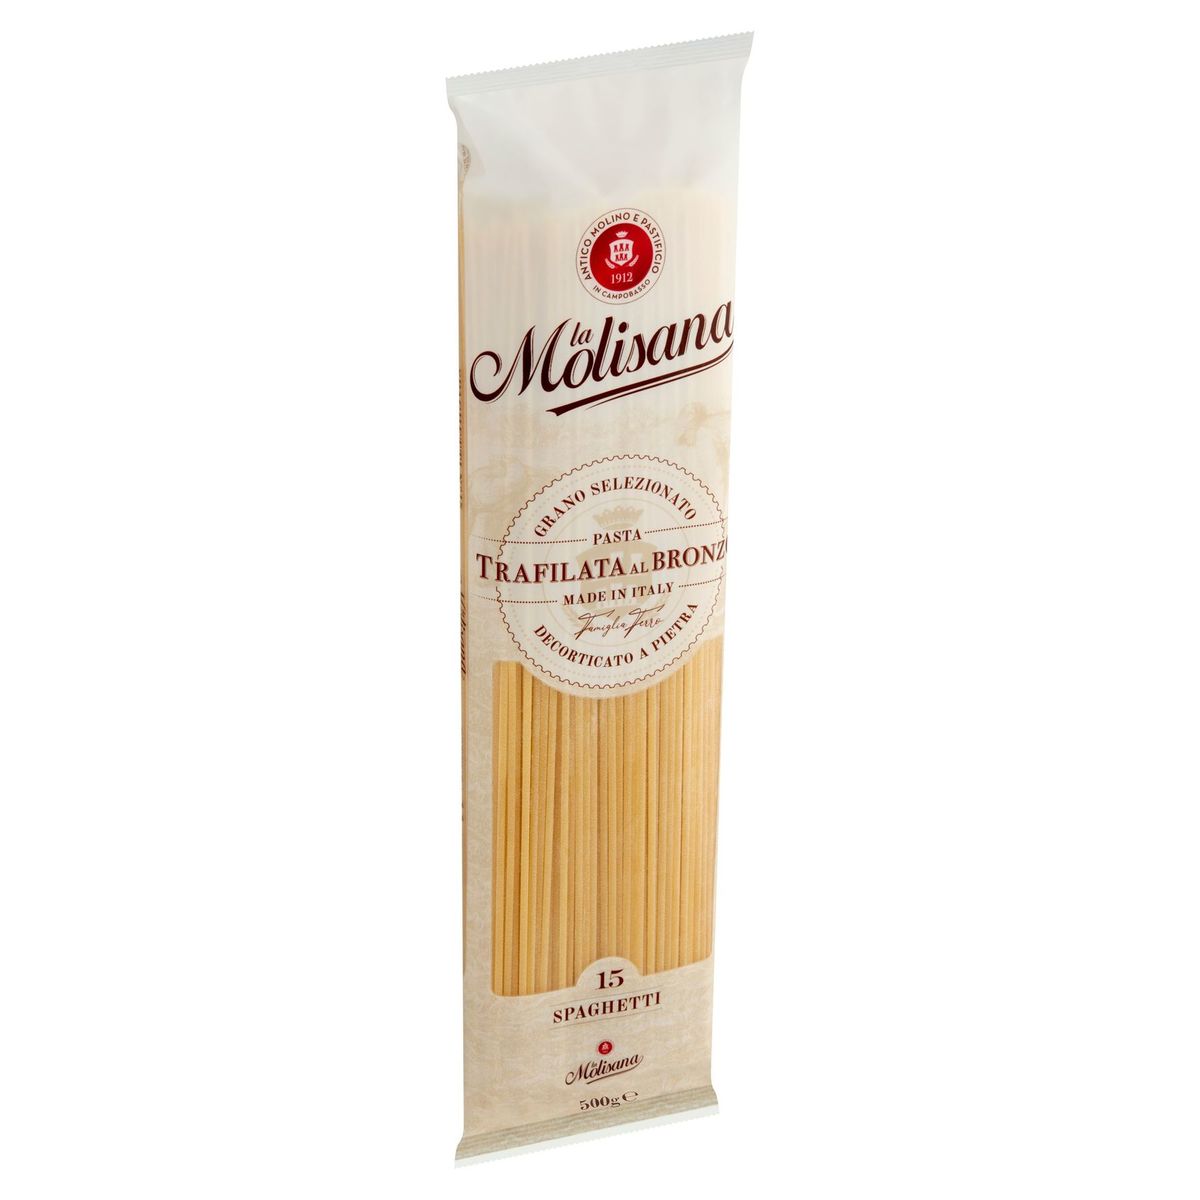 La Molisana Spaghetti N°15 500 g